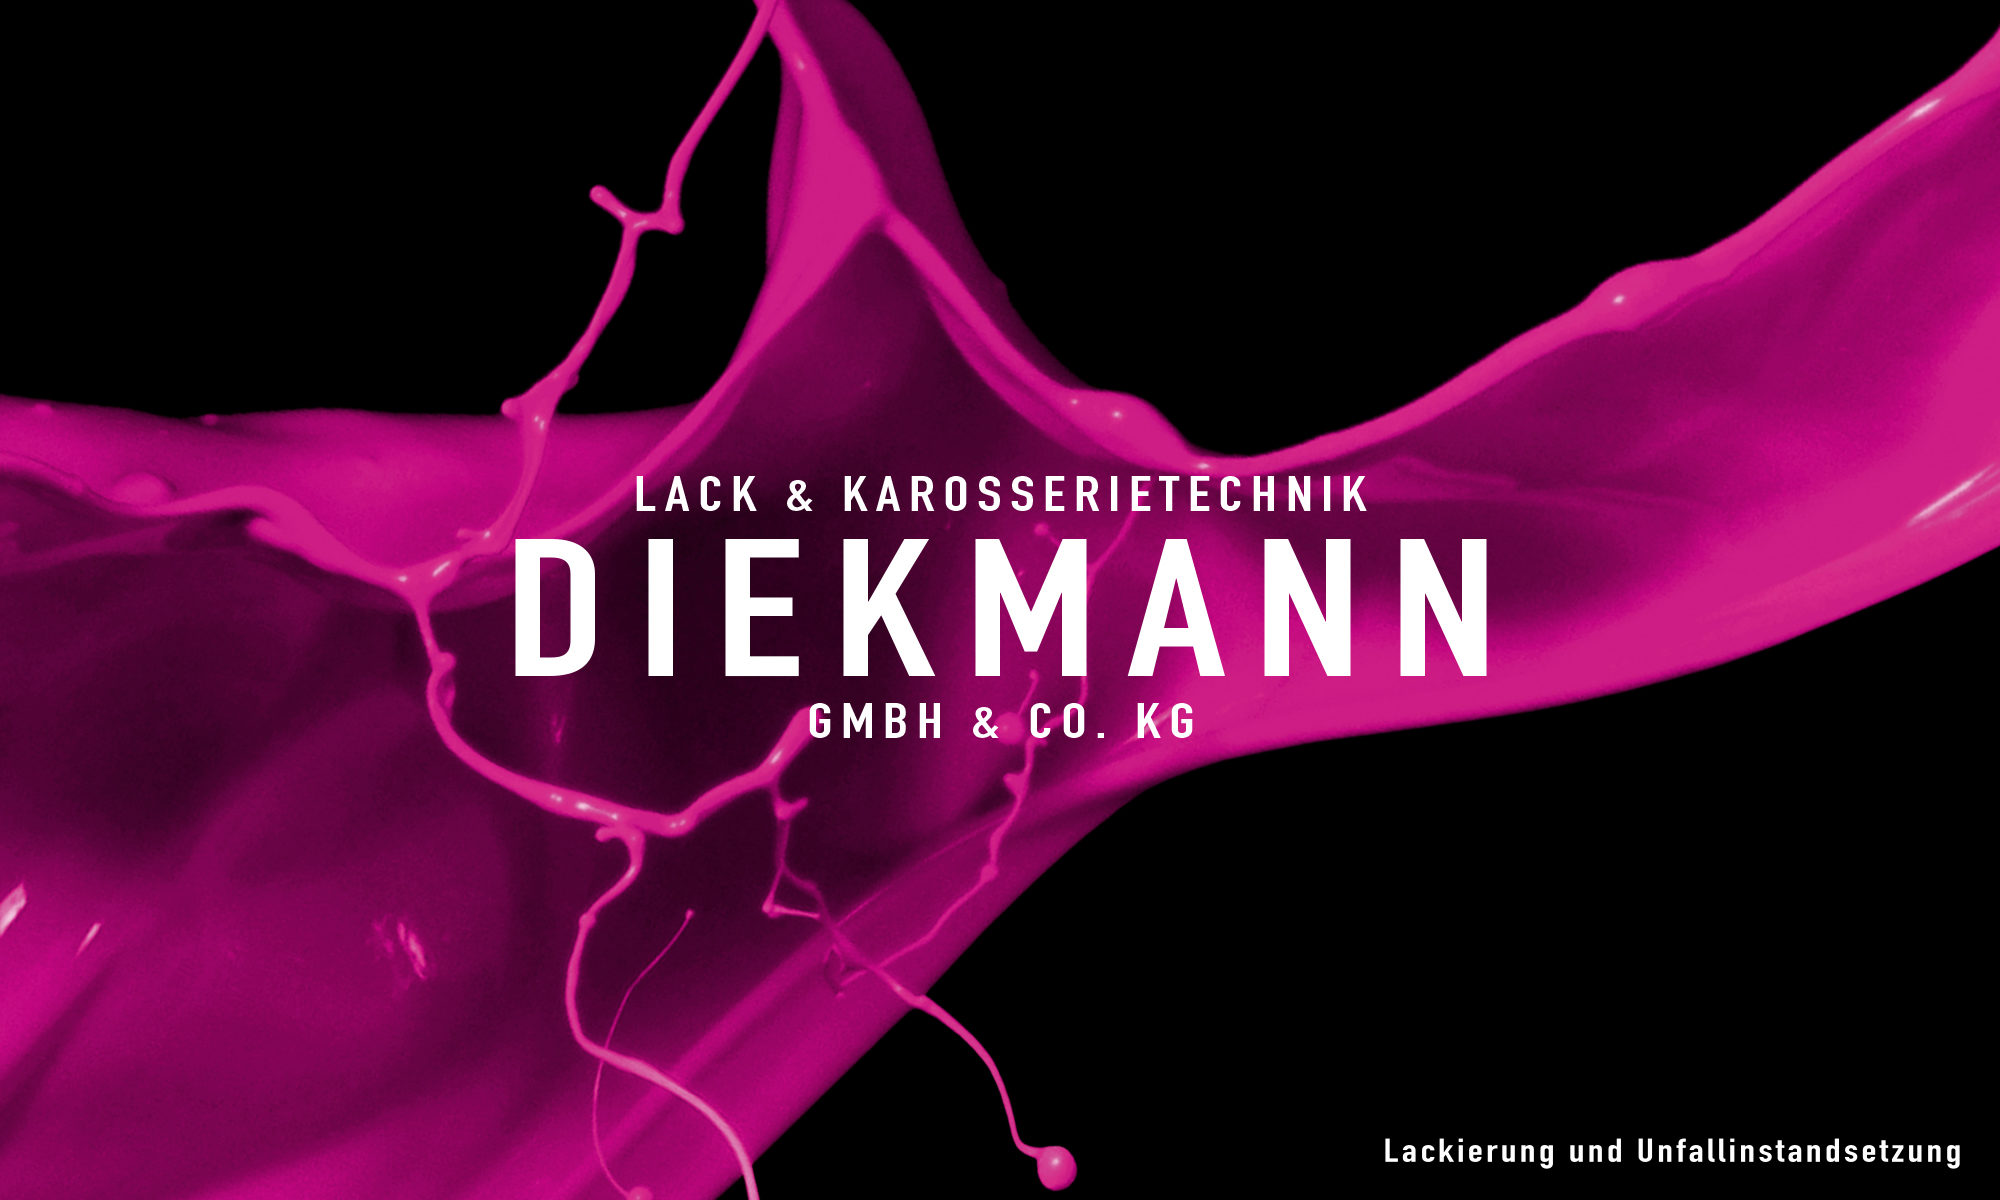 Lack & Karosserietechnik Diekmann GmbH & Co.KG